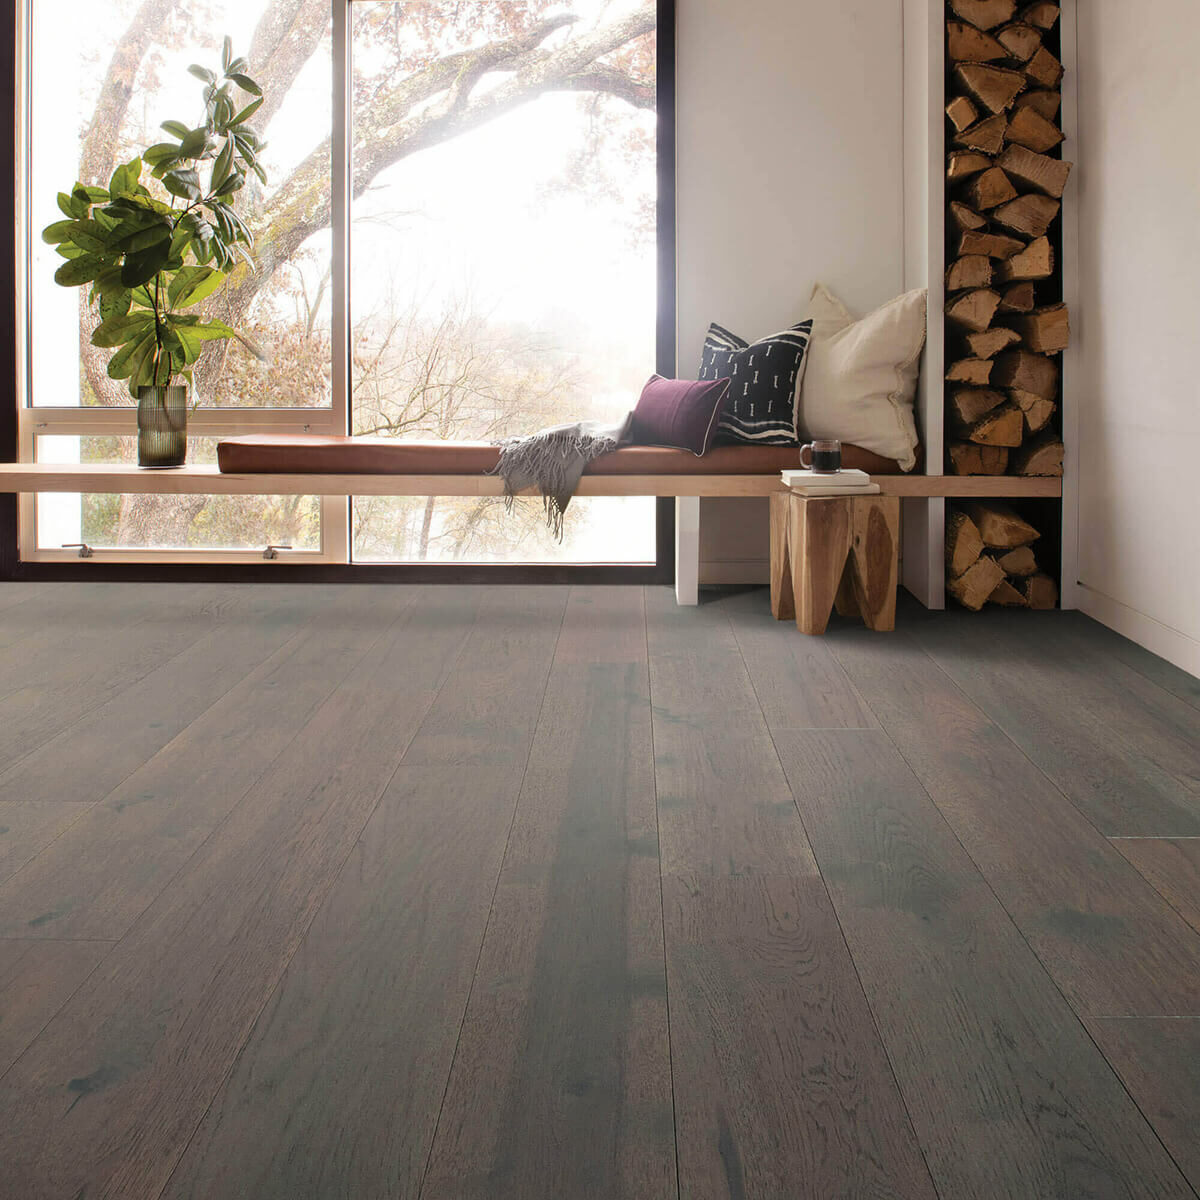 Hardwood Inspiration | Carpetland USA Granite & Flooring